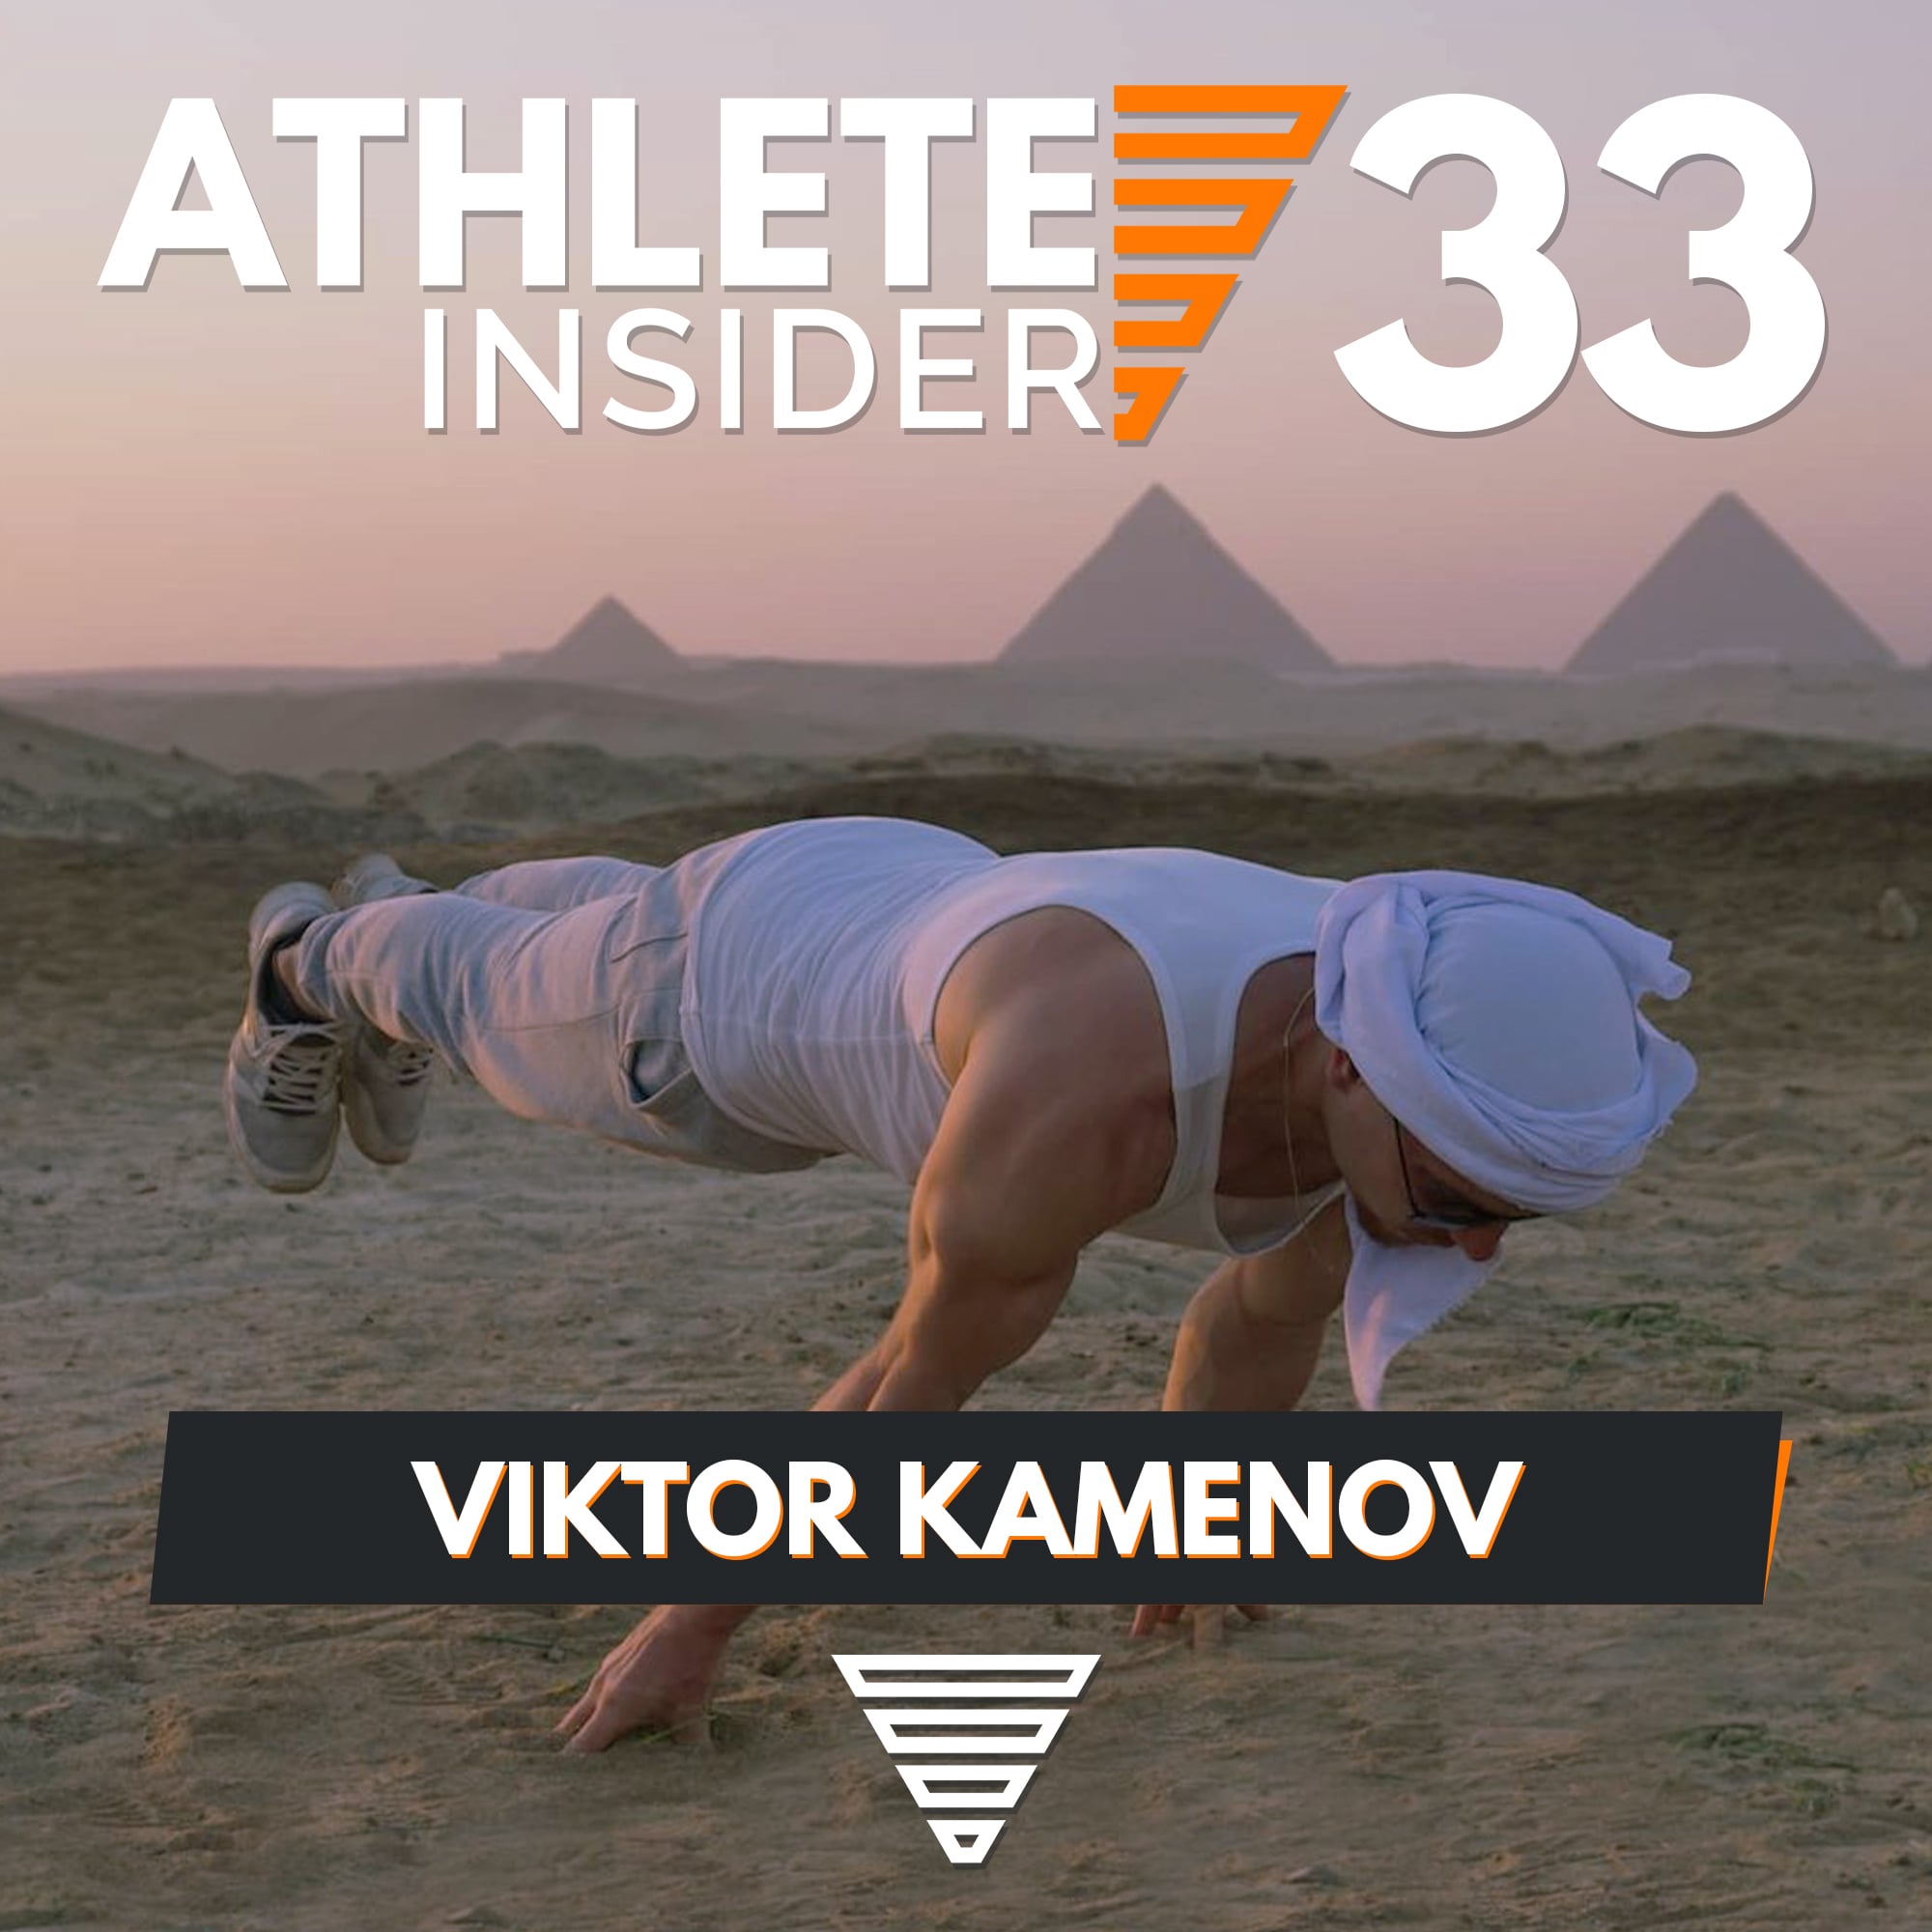 VIKTOR KAMENOV | His Planche Training & Advice  | Interview | The Athlete Insider Podcast #33